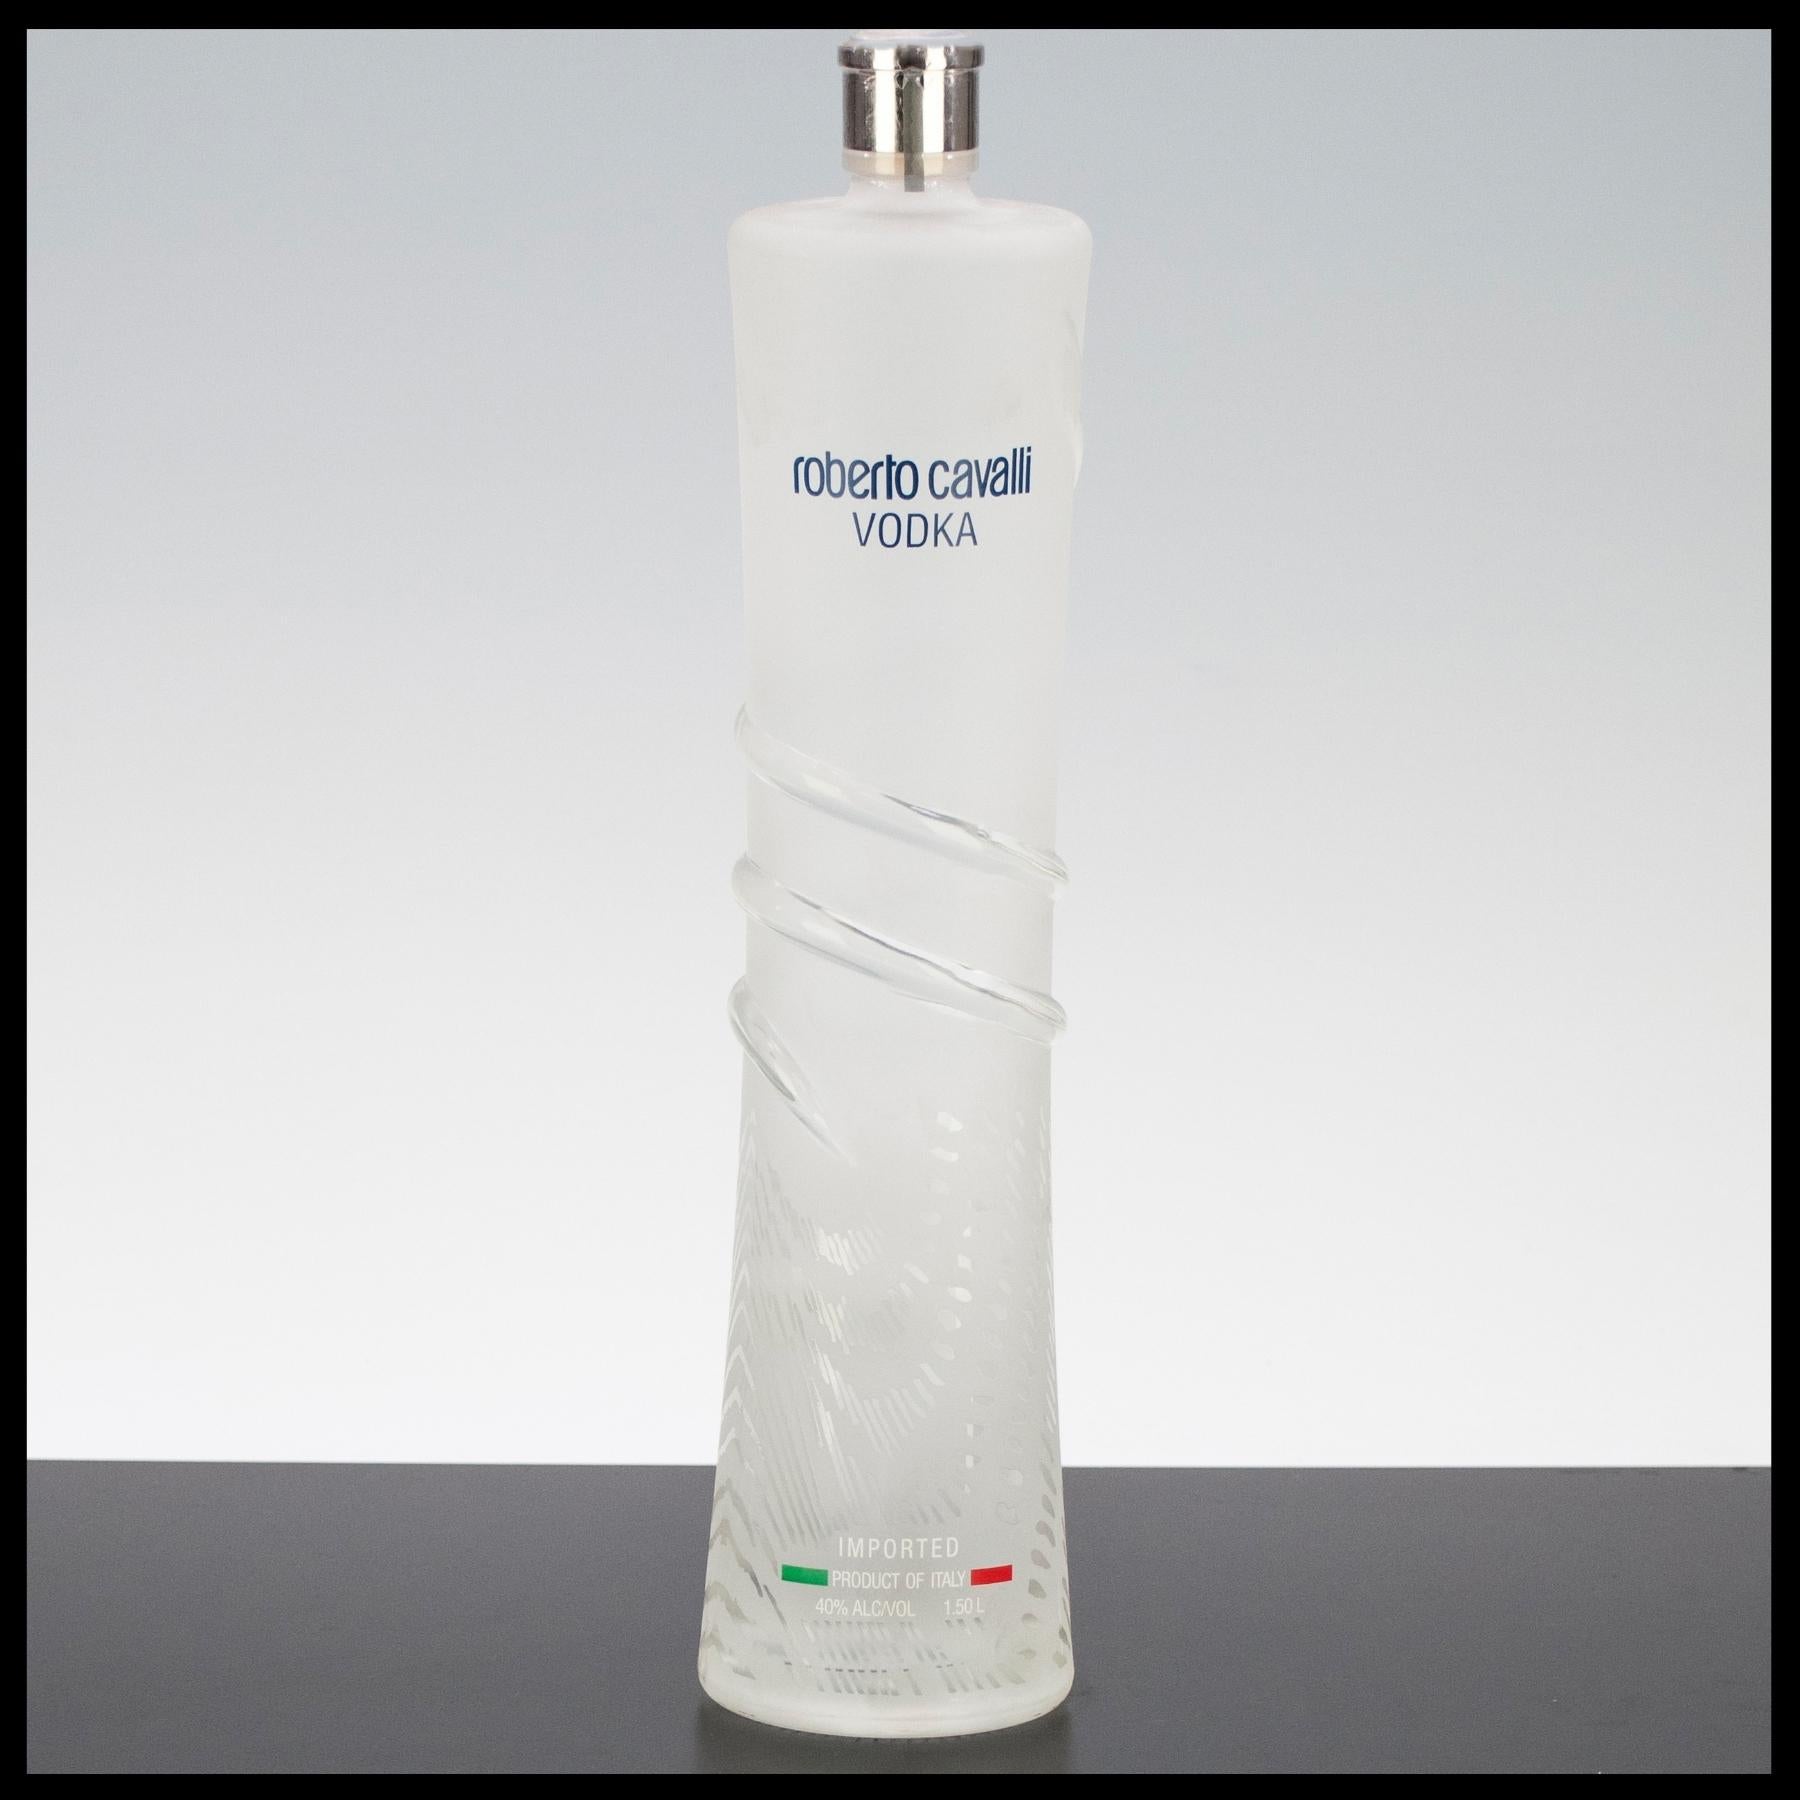 Roberto Cavalli Vodka 1,5L - 40% Vol.